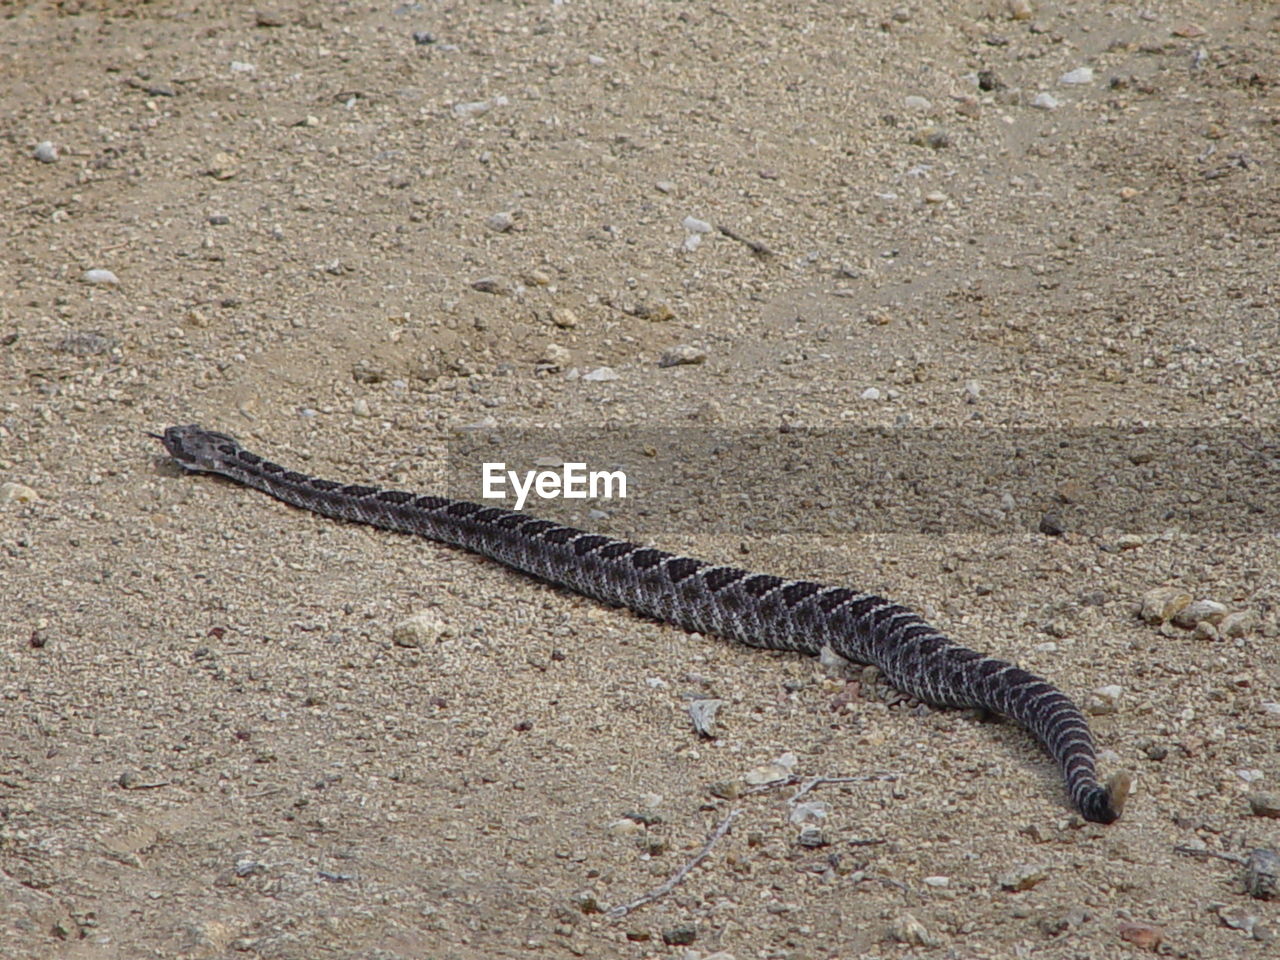 High angle view of snake on ground